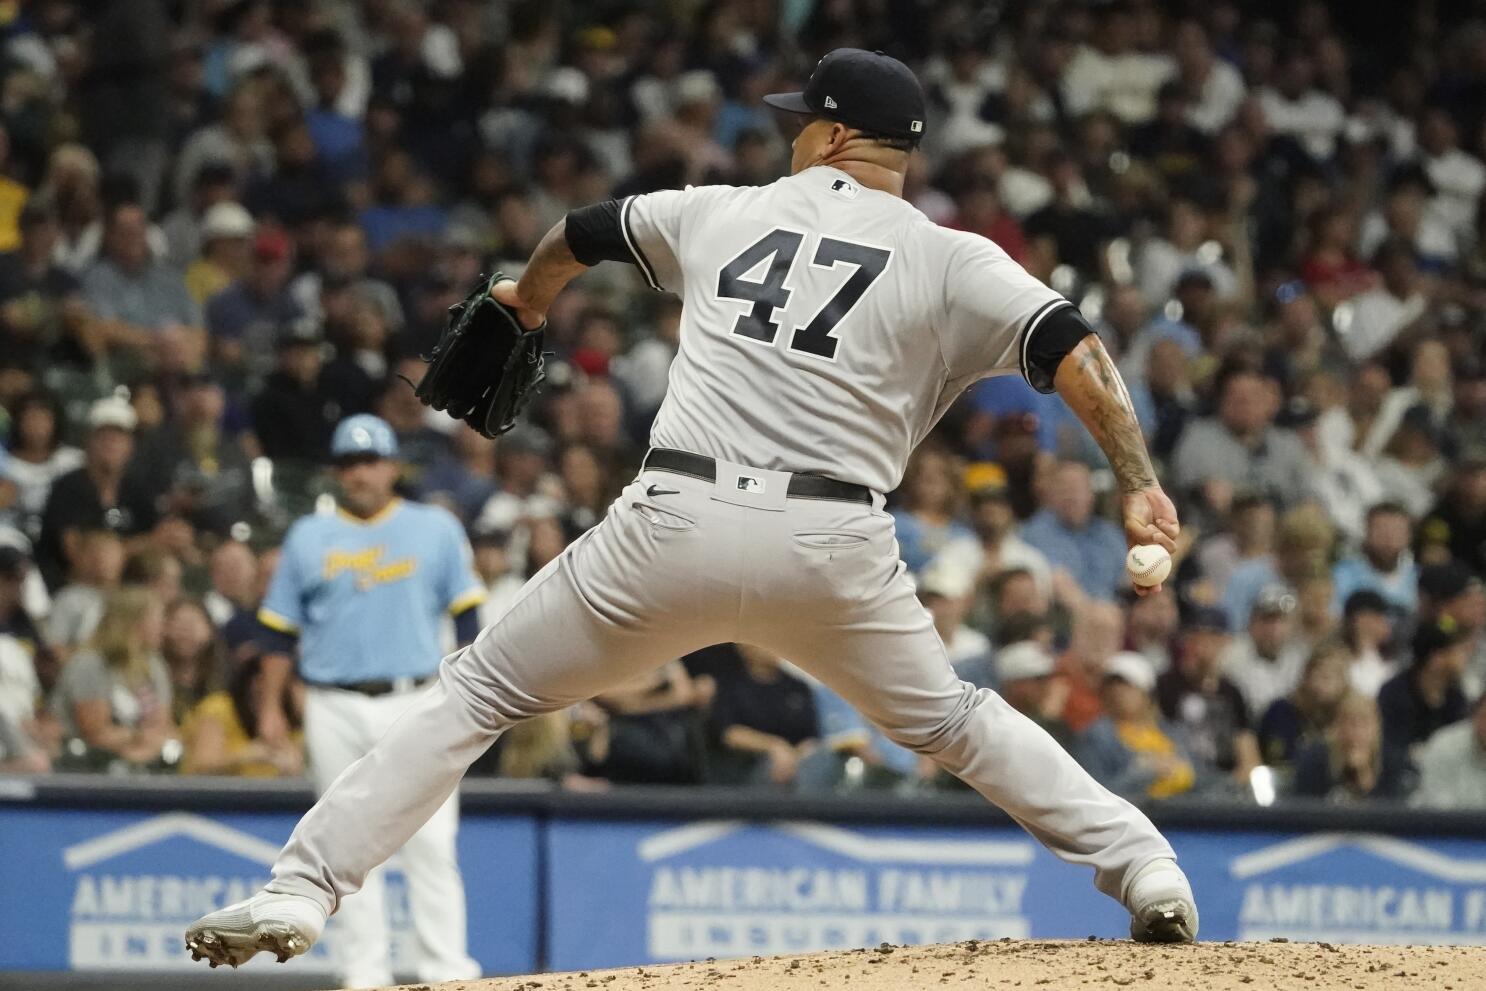 Yankees pitcher Frankie Montas admits to pre-existing injury